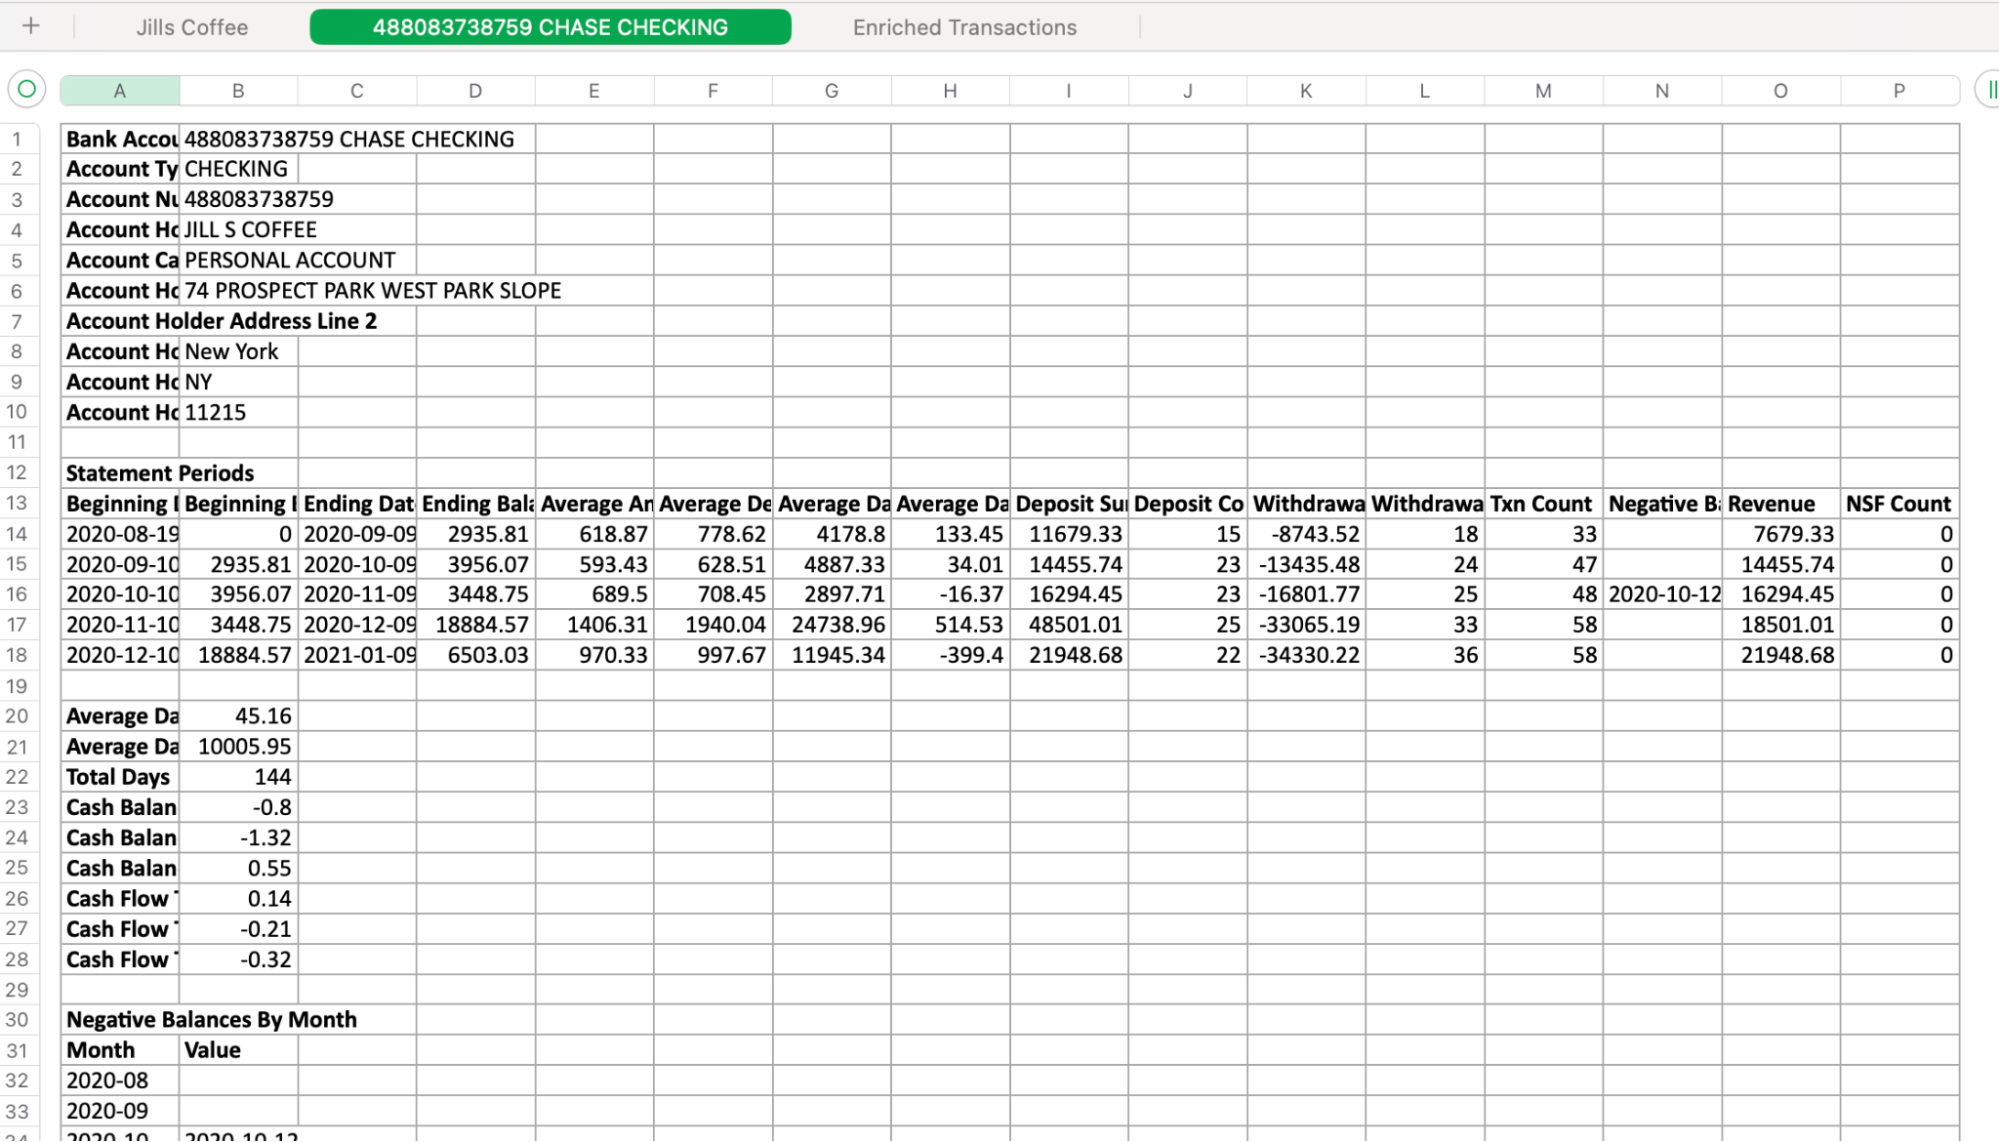 Lender Analytics export, following sheet